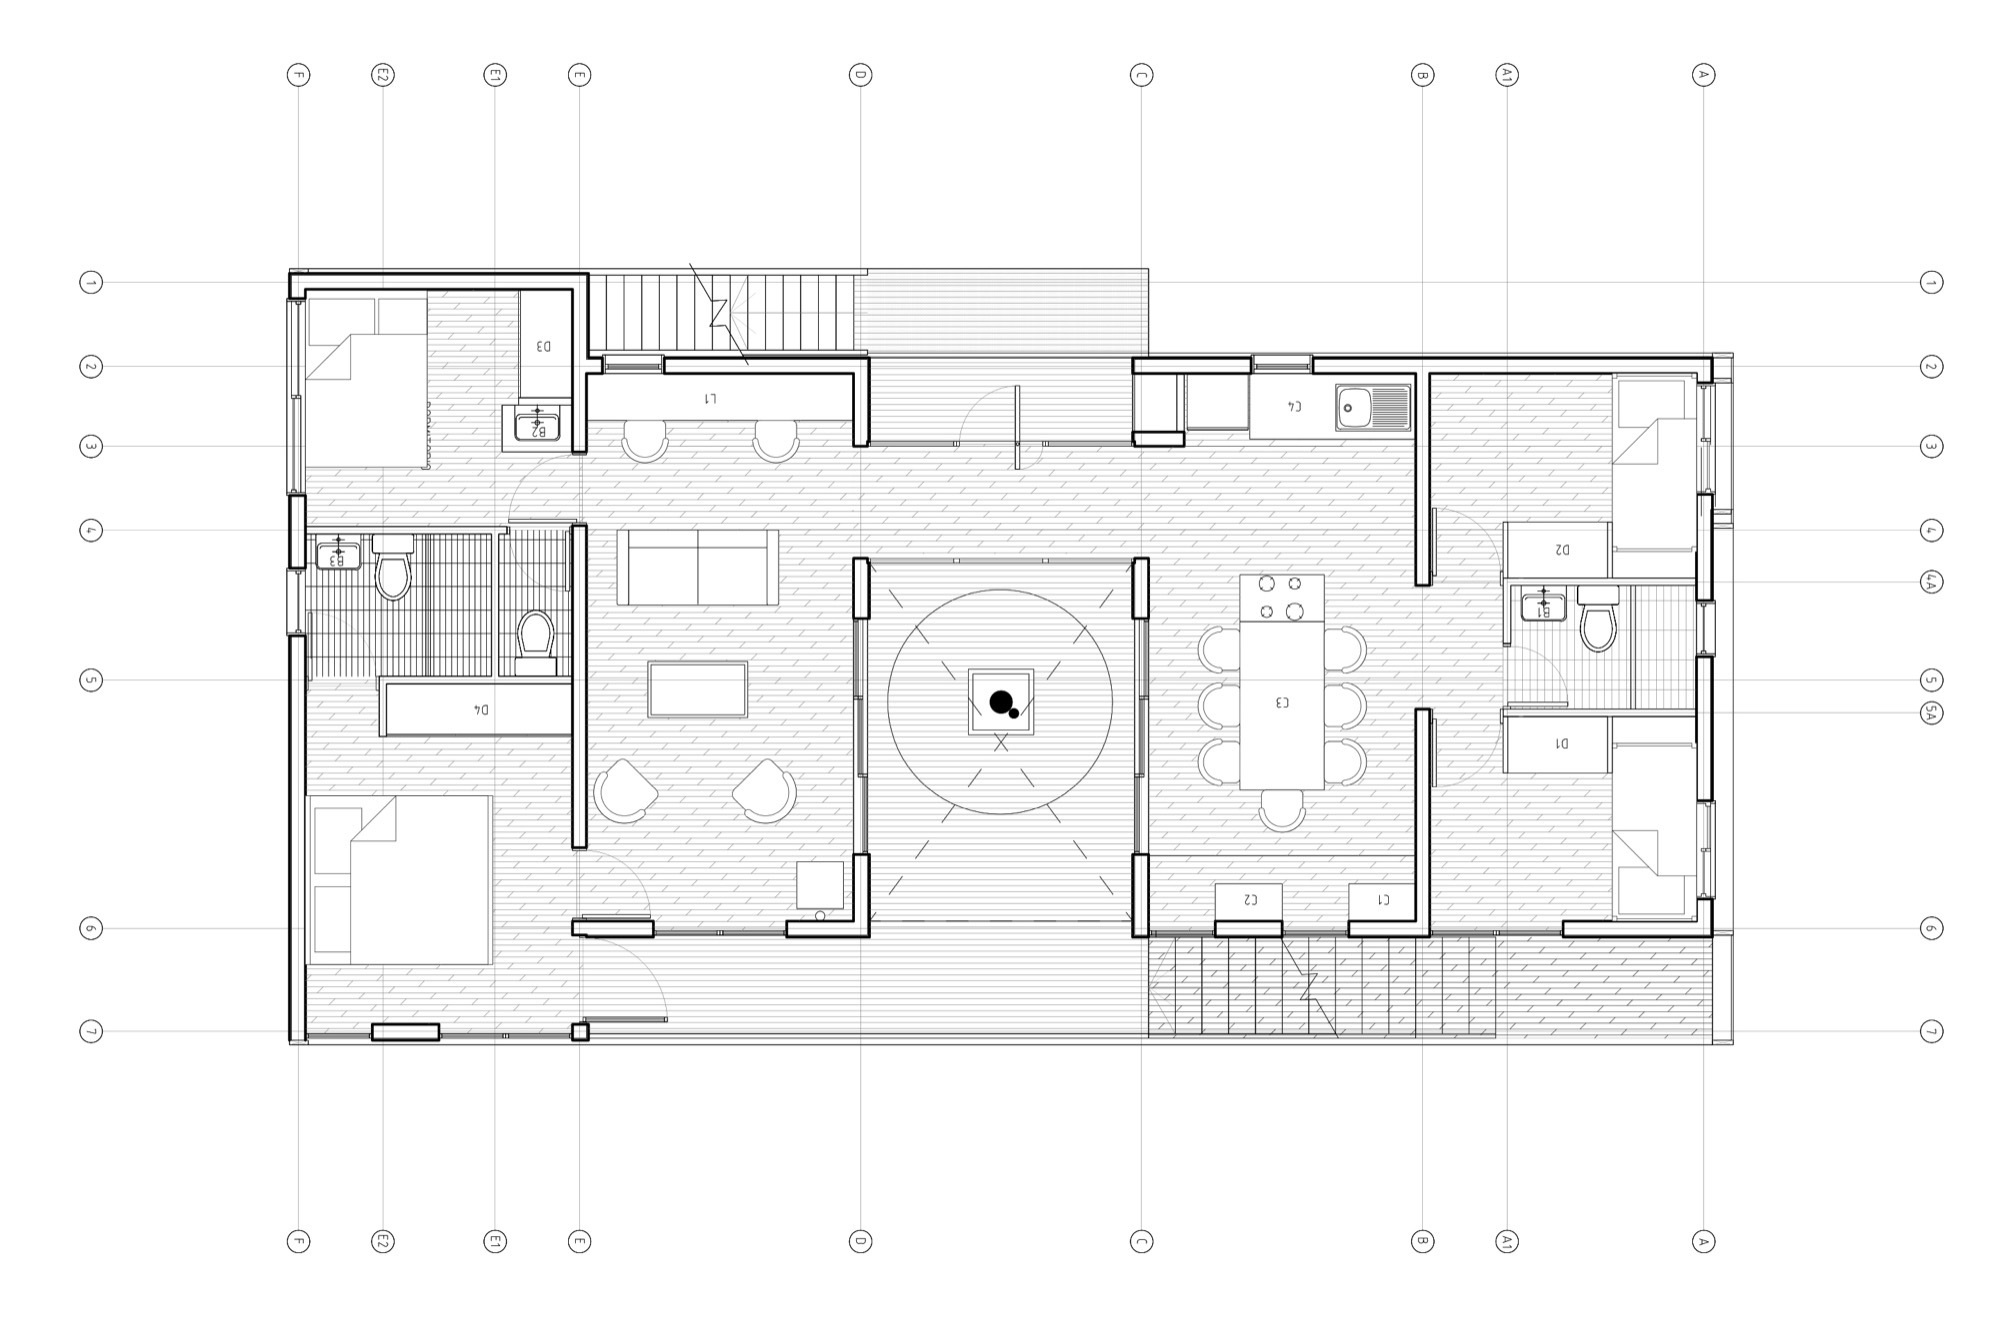 The Folding House by B+V Arquitectos